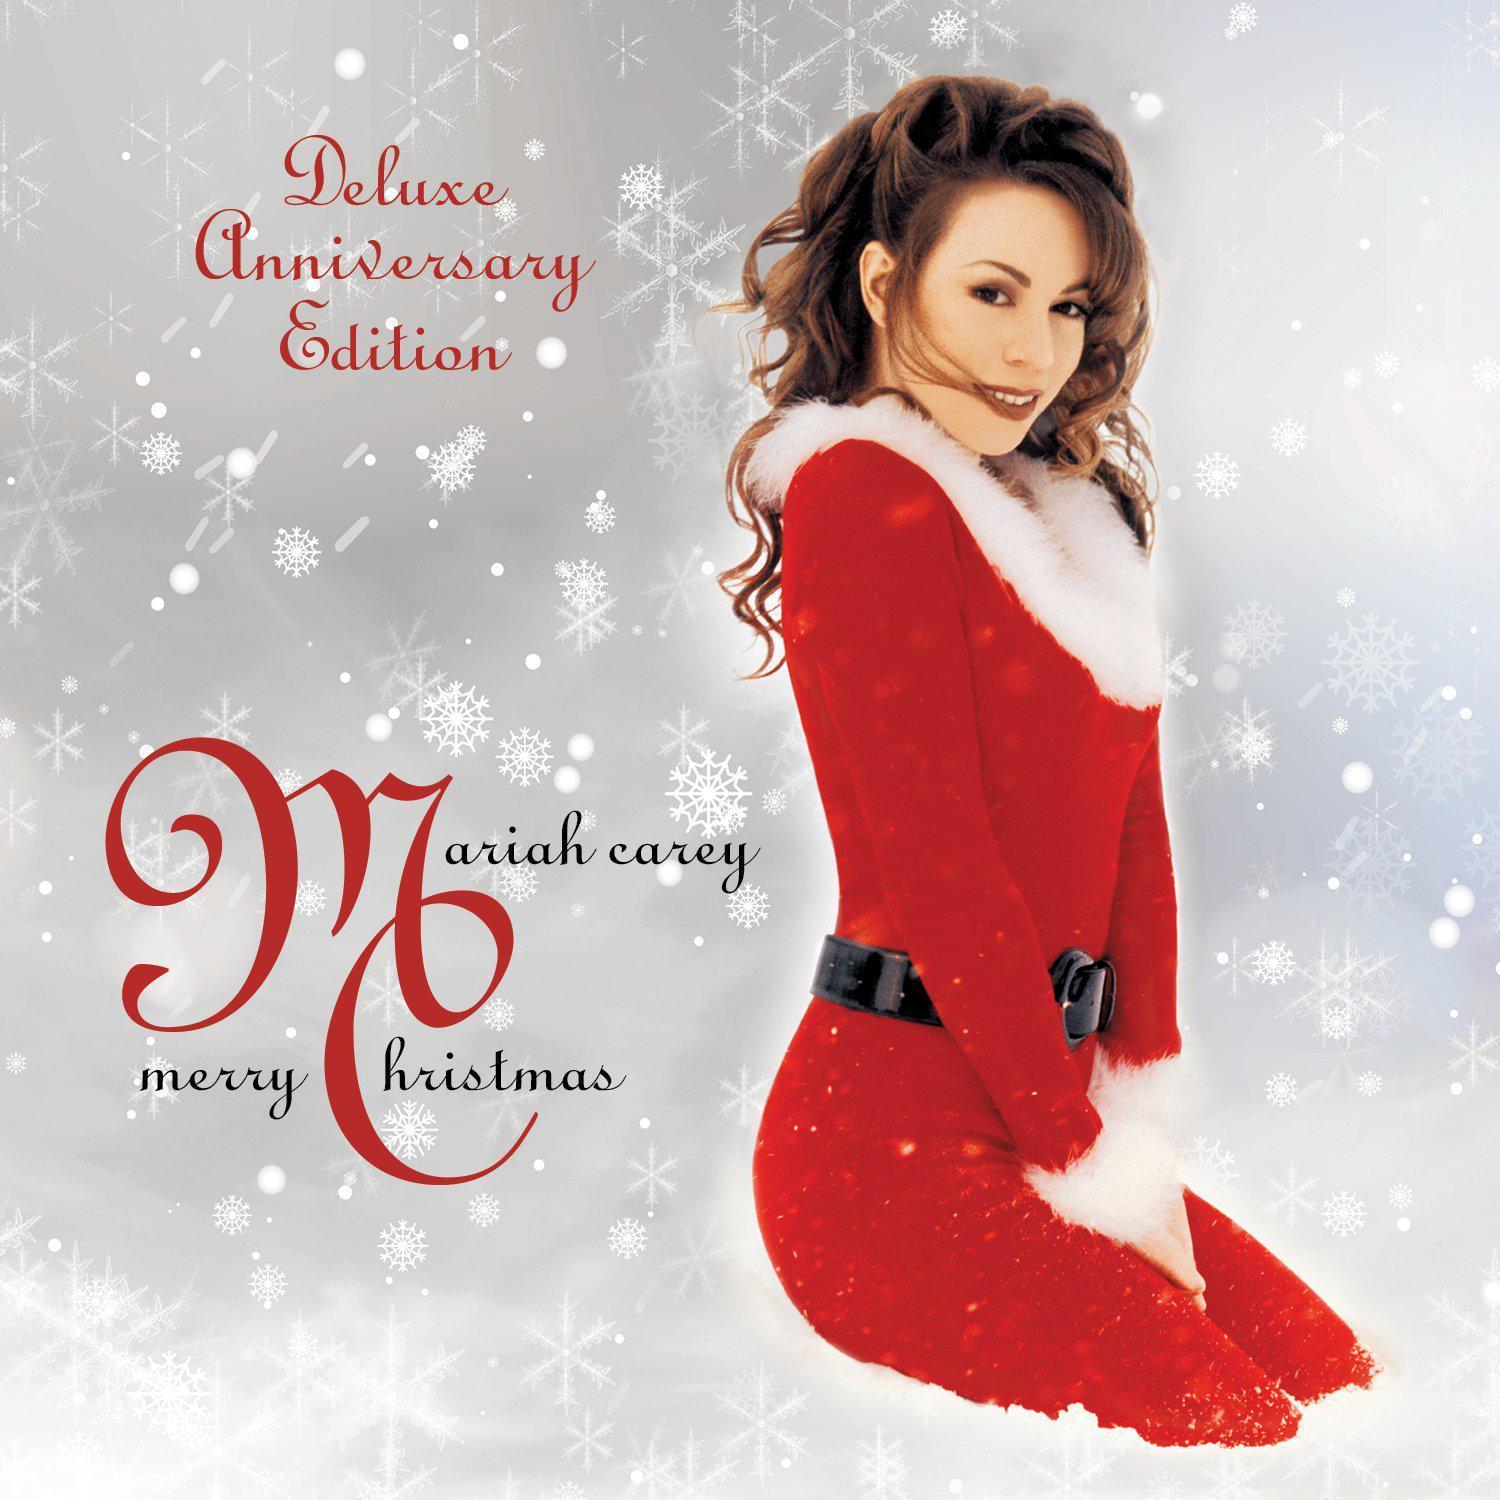 Merry Christmas By Mariah Carey.jpg